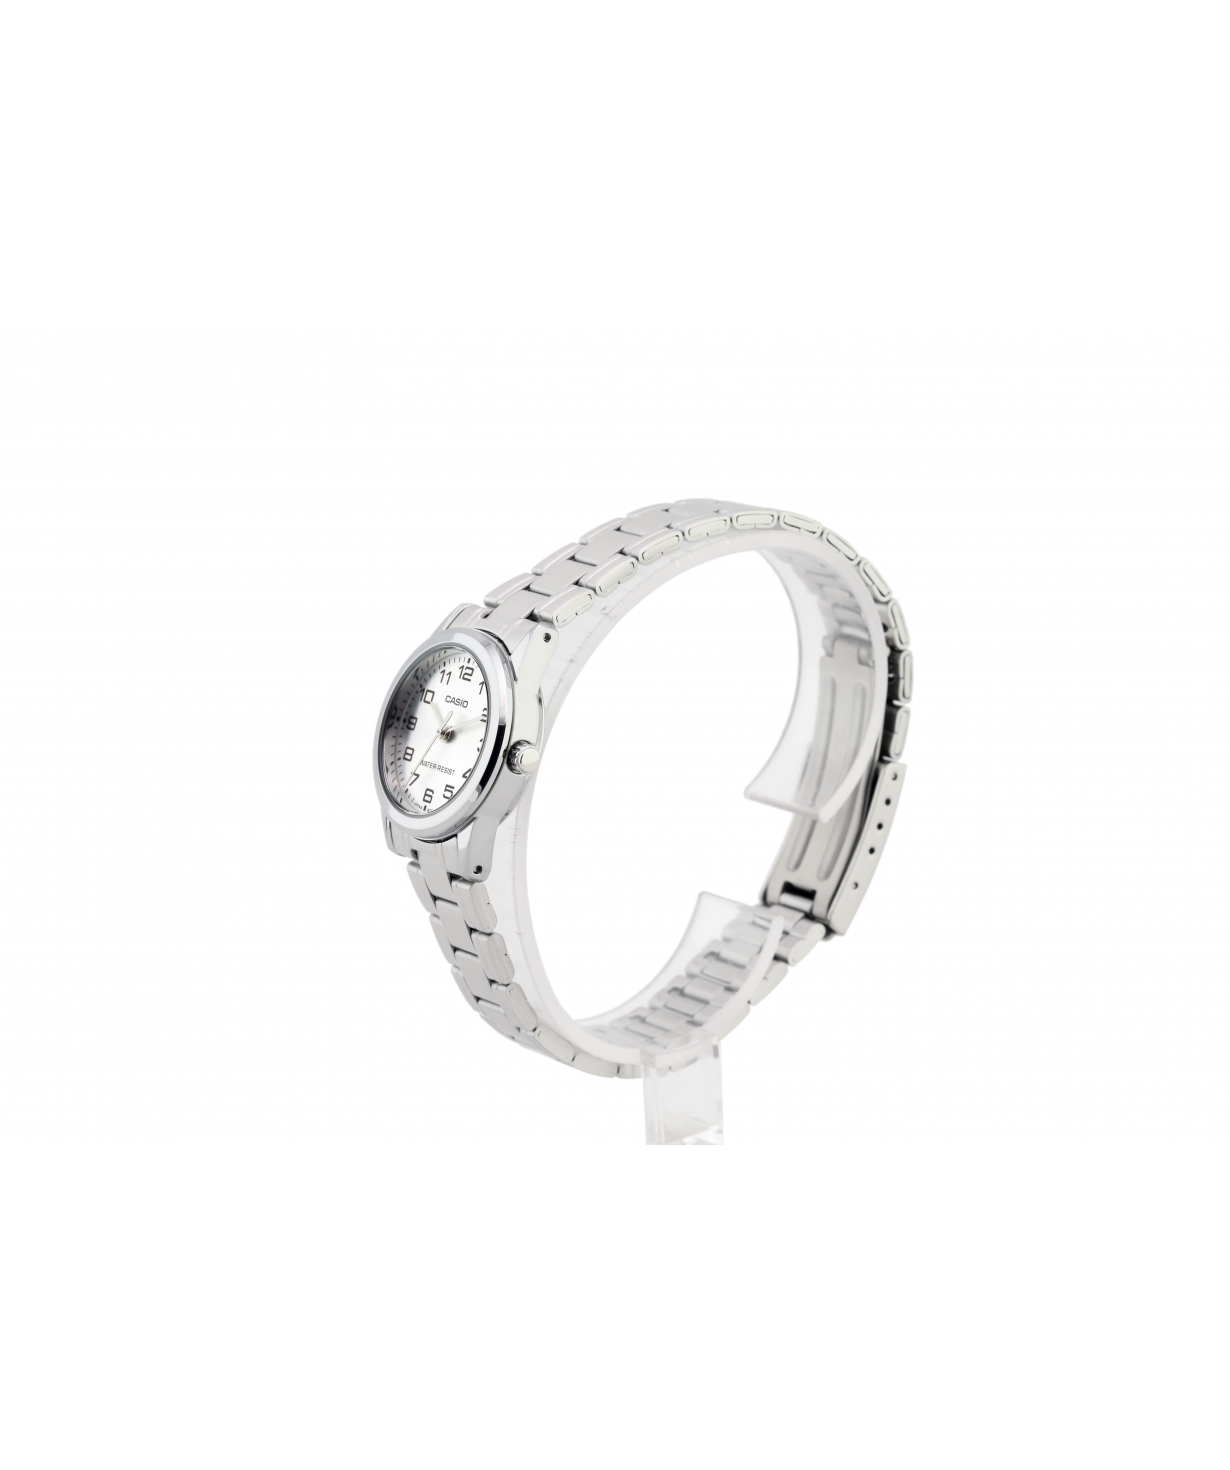 Wristwatch  `Casio` LTP-V001D-7BUDF